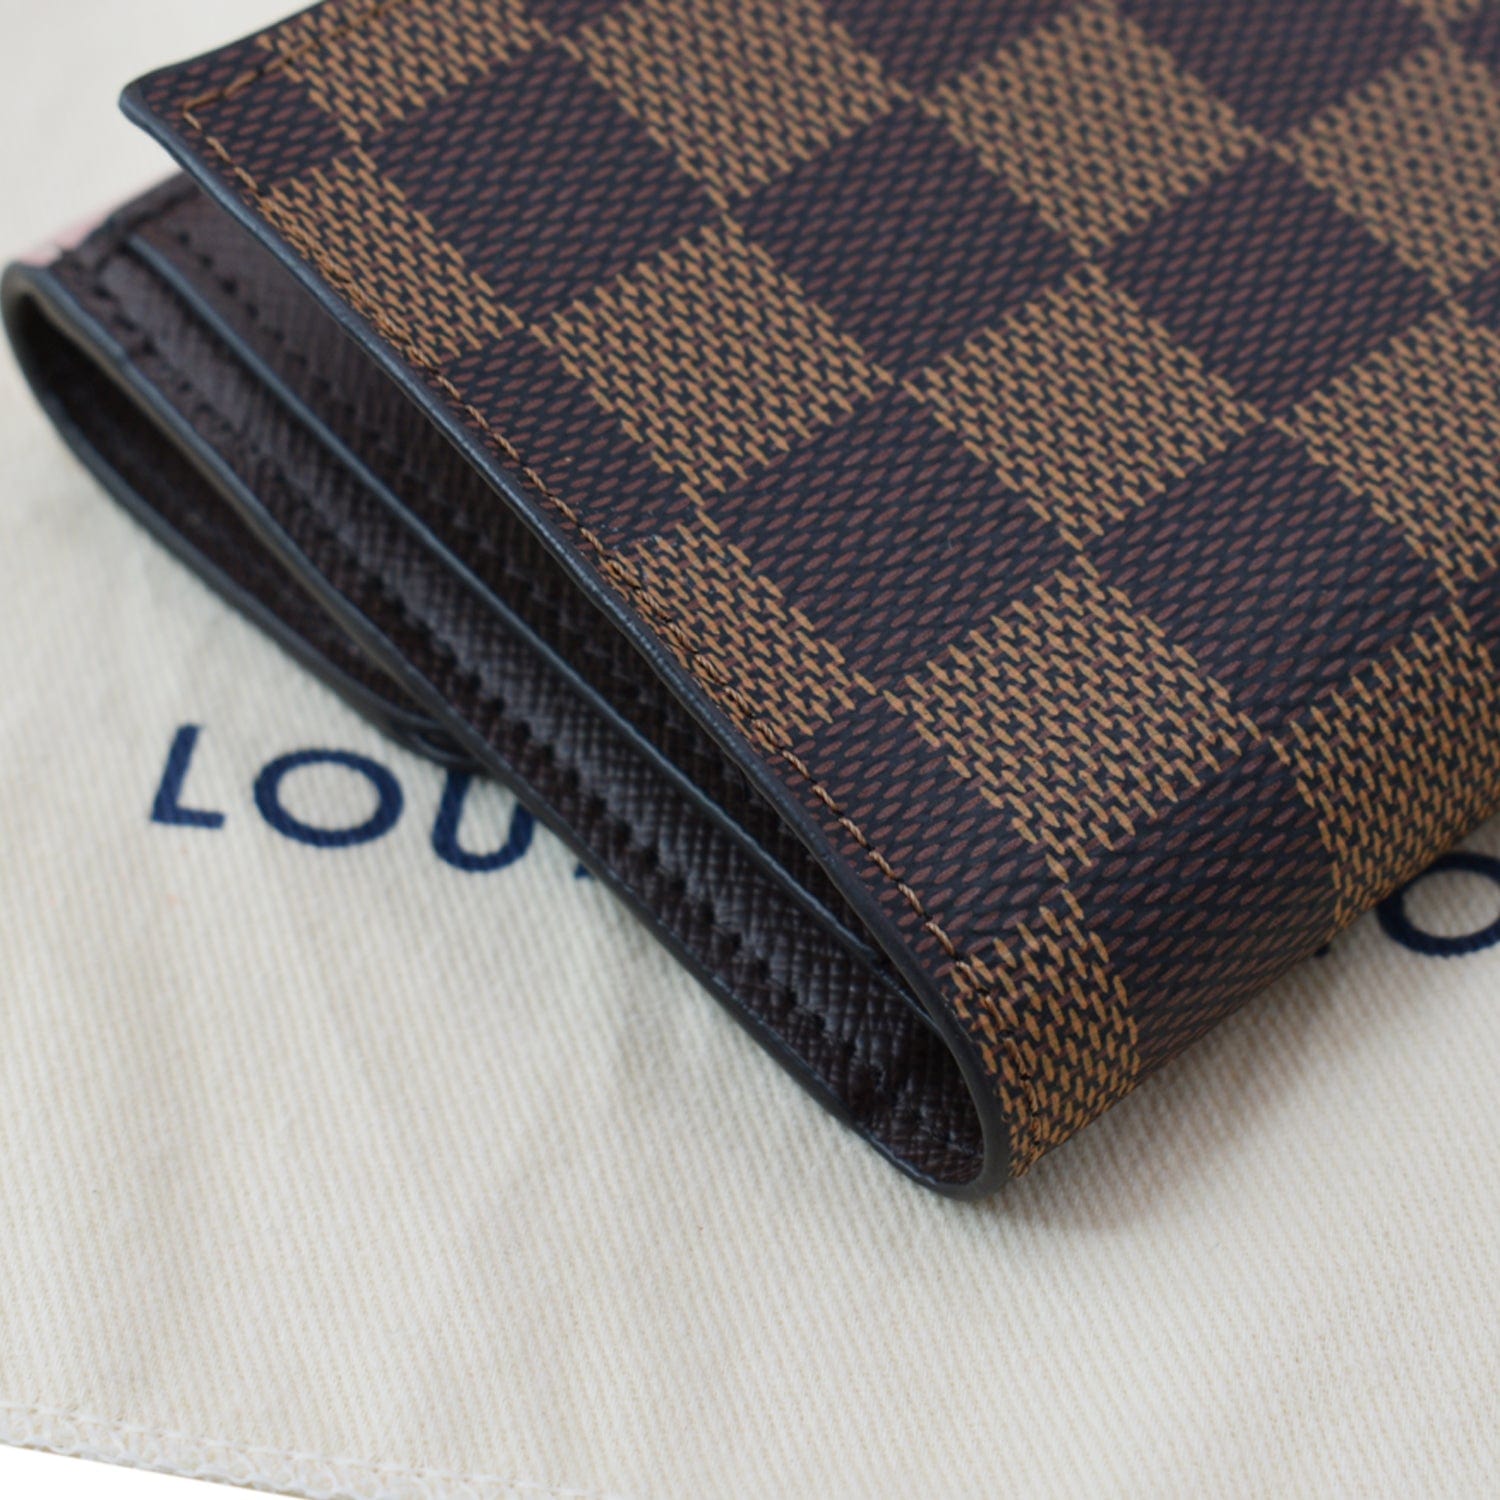 Louis Vuitton, Bags, Louis Vuitton Damier Ebene Compact Wallet 212